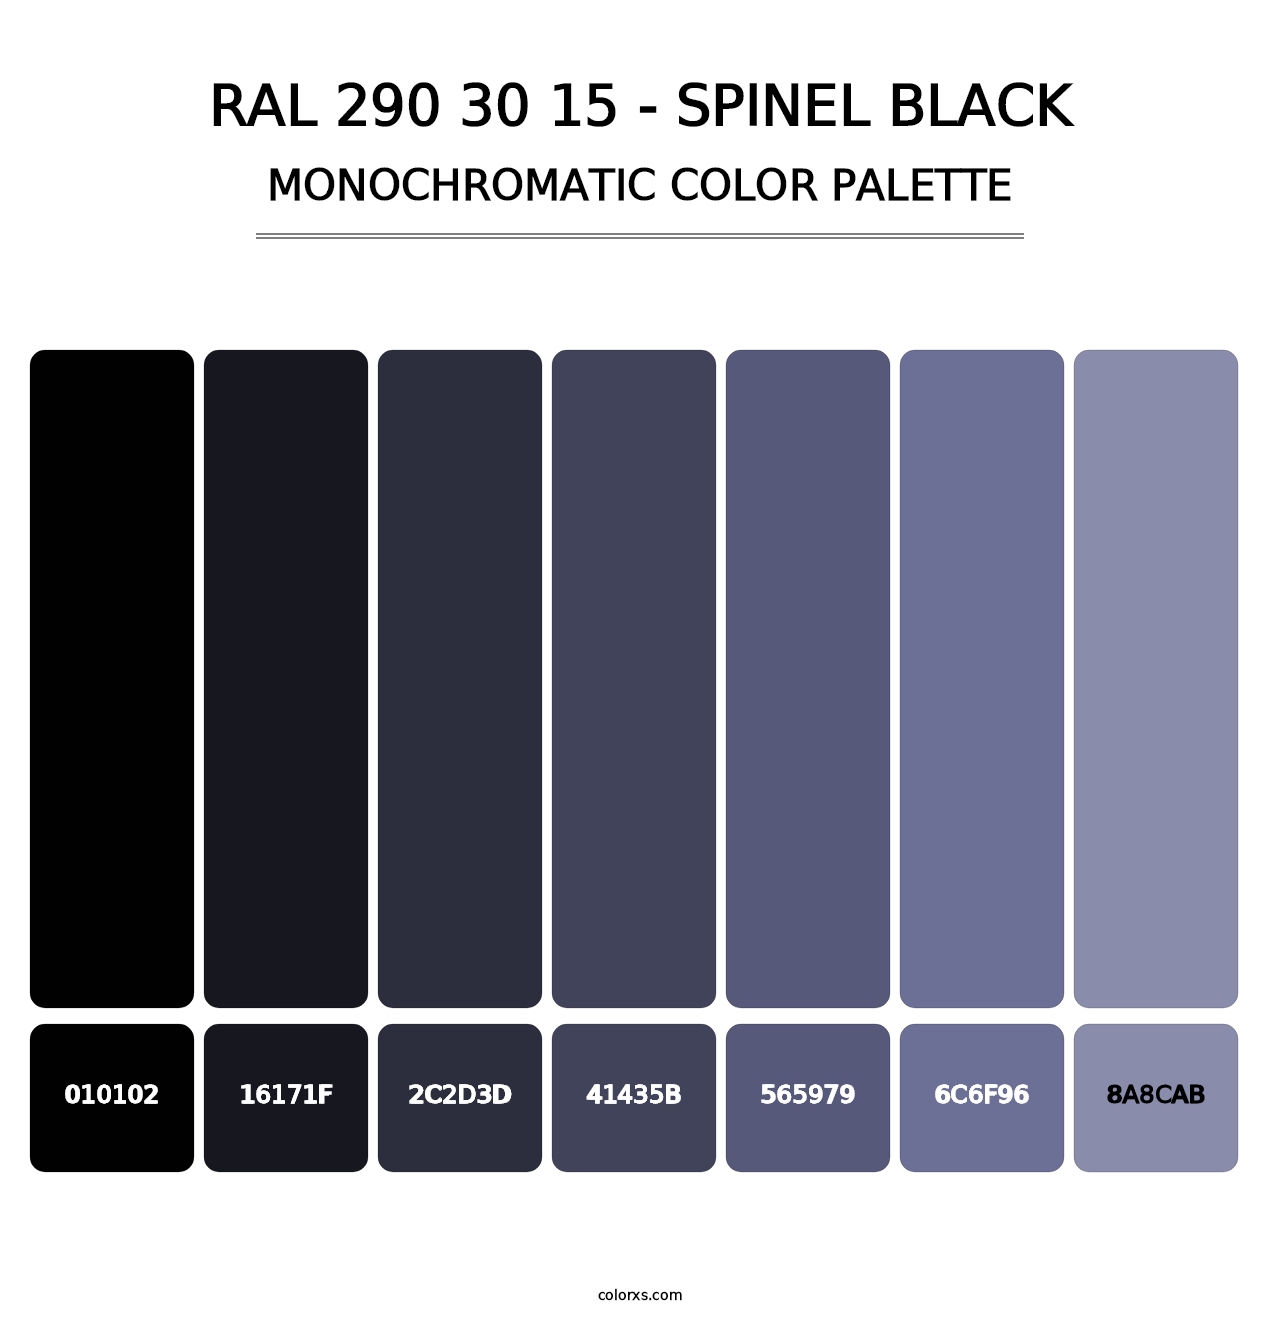 RAL 290 30 15 - Spinel Black - Monochromatic Color Palette